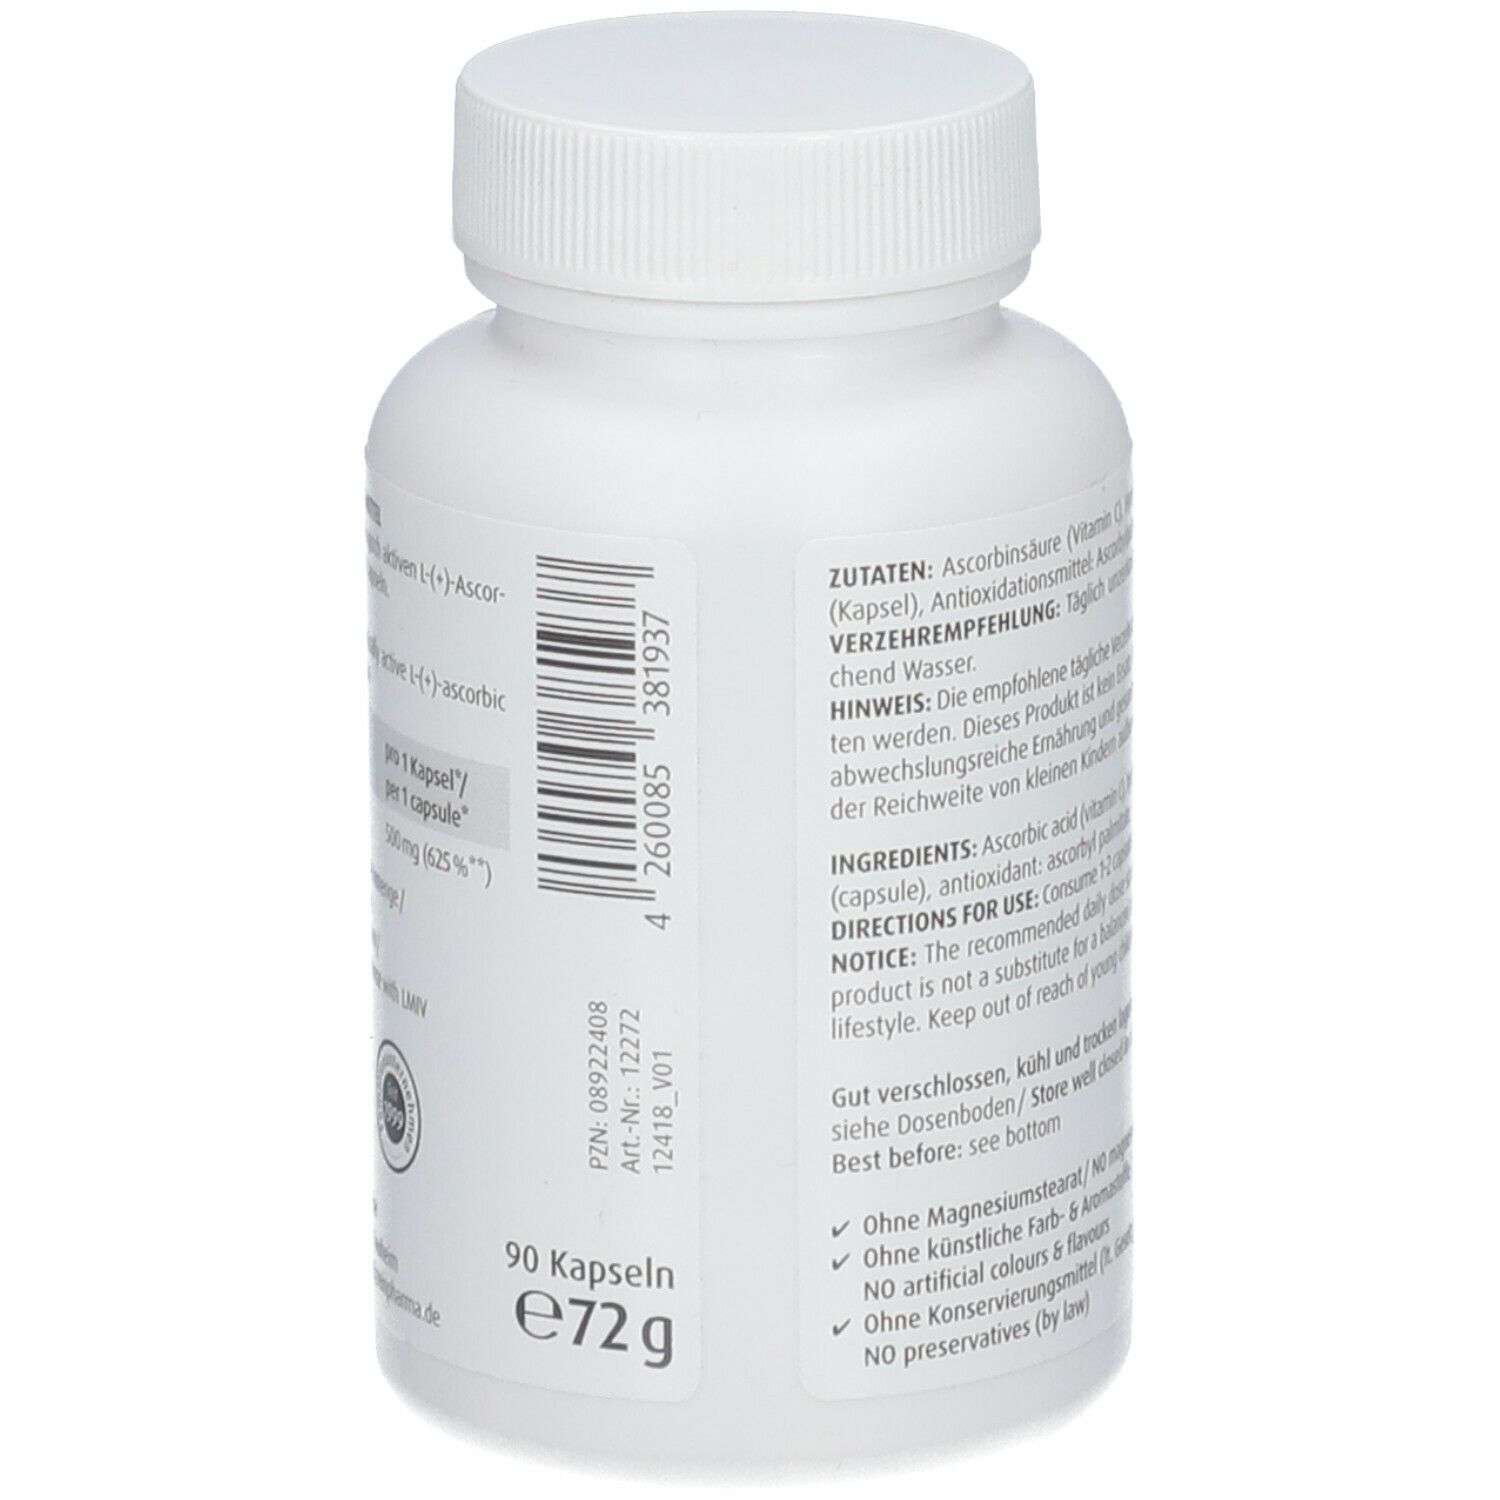 ZeinPharma® Vitamin C Kapseln 500 mg